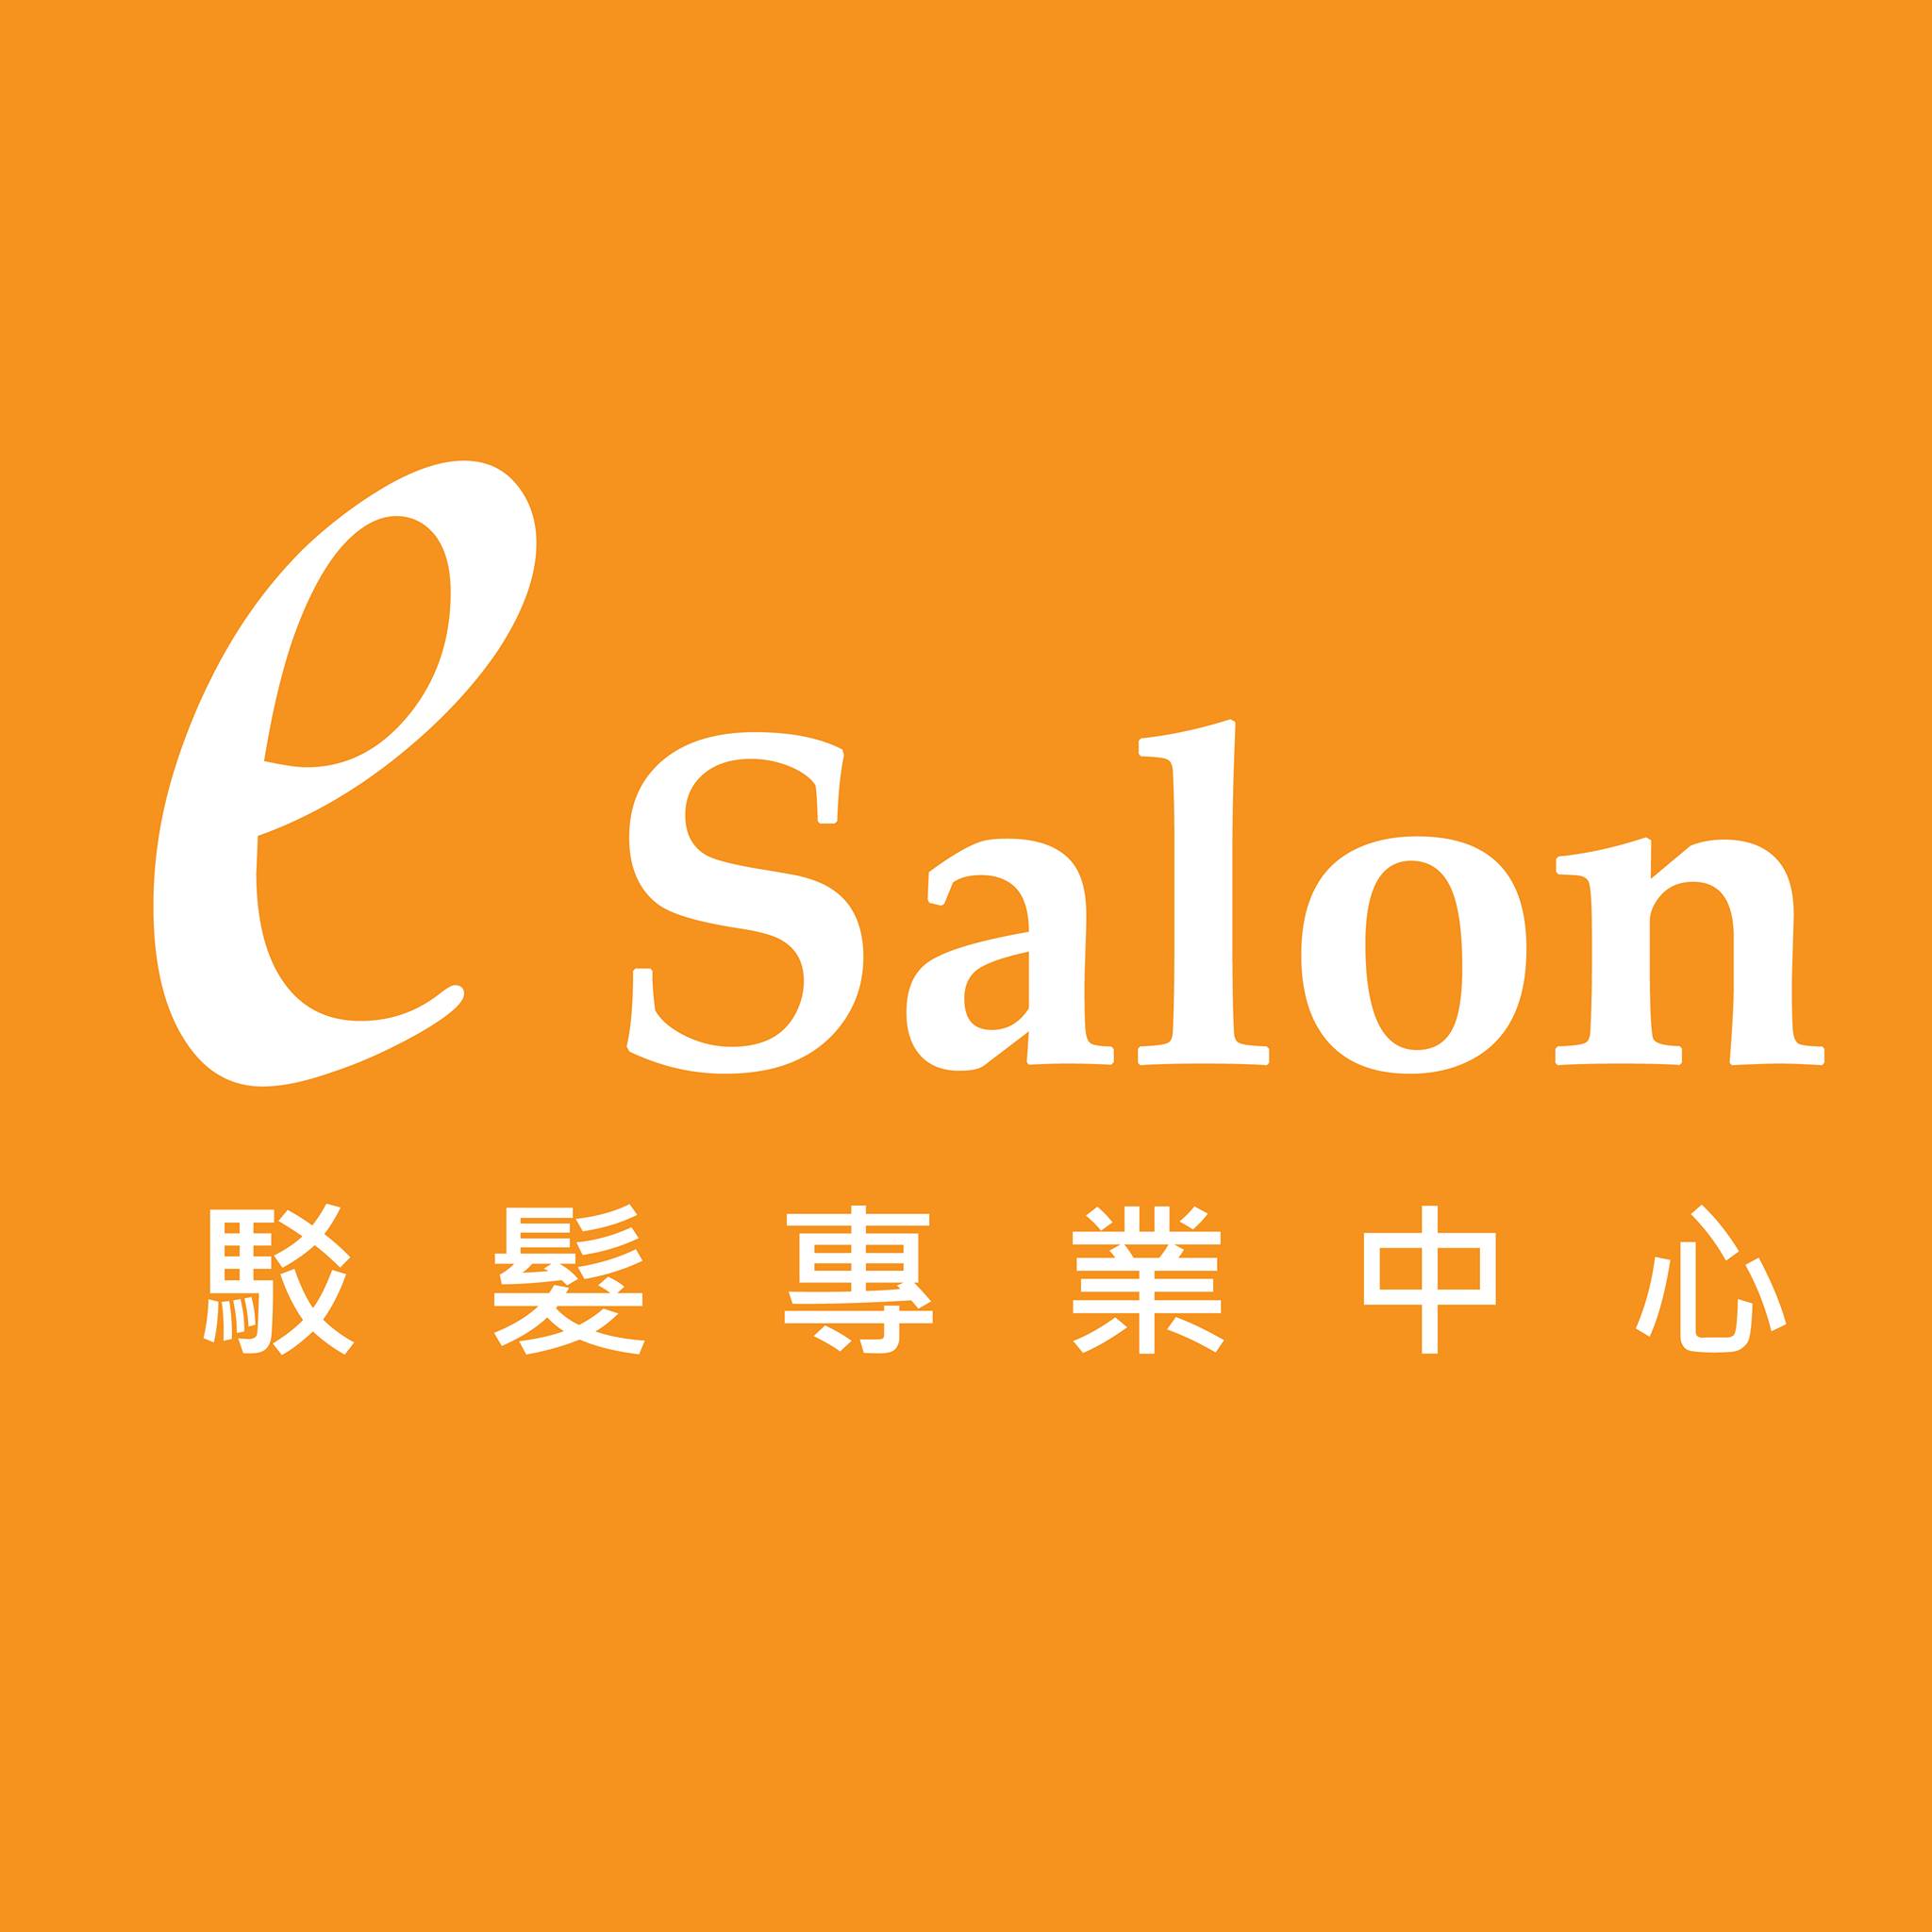 植发/驳发: E Salon Station 駁髪專業中心